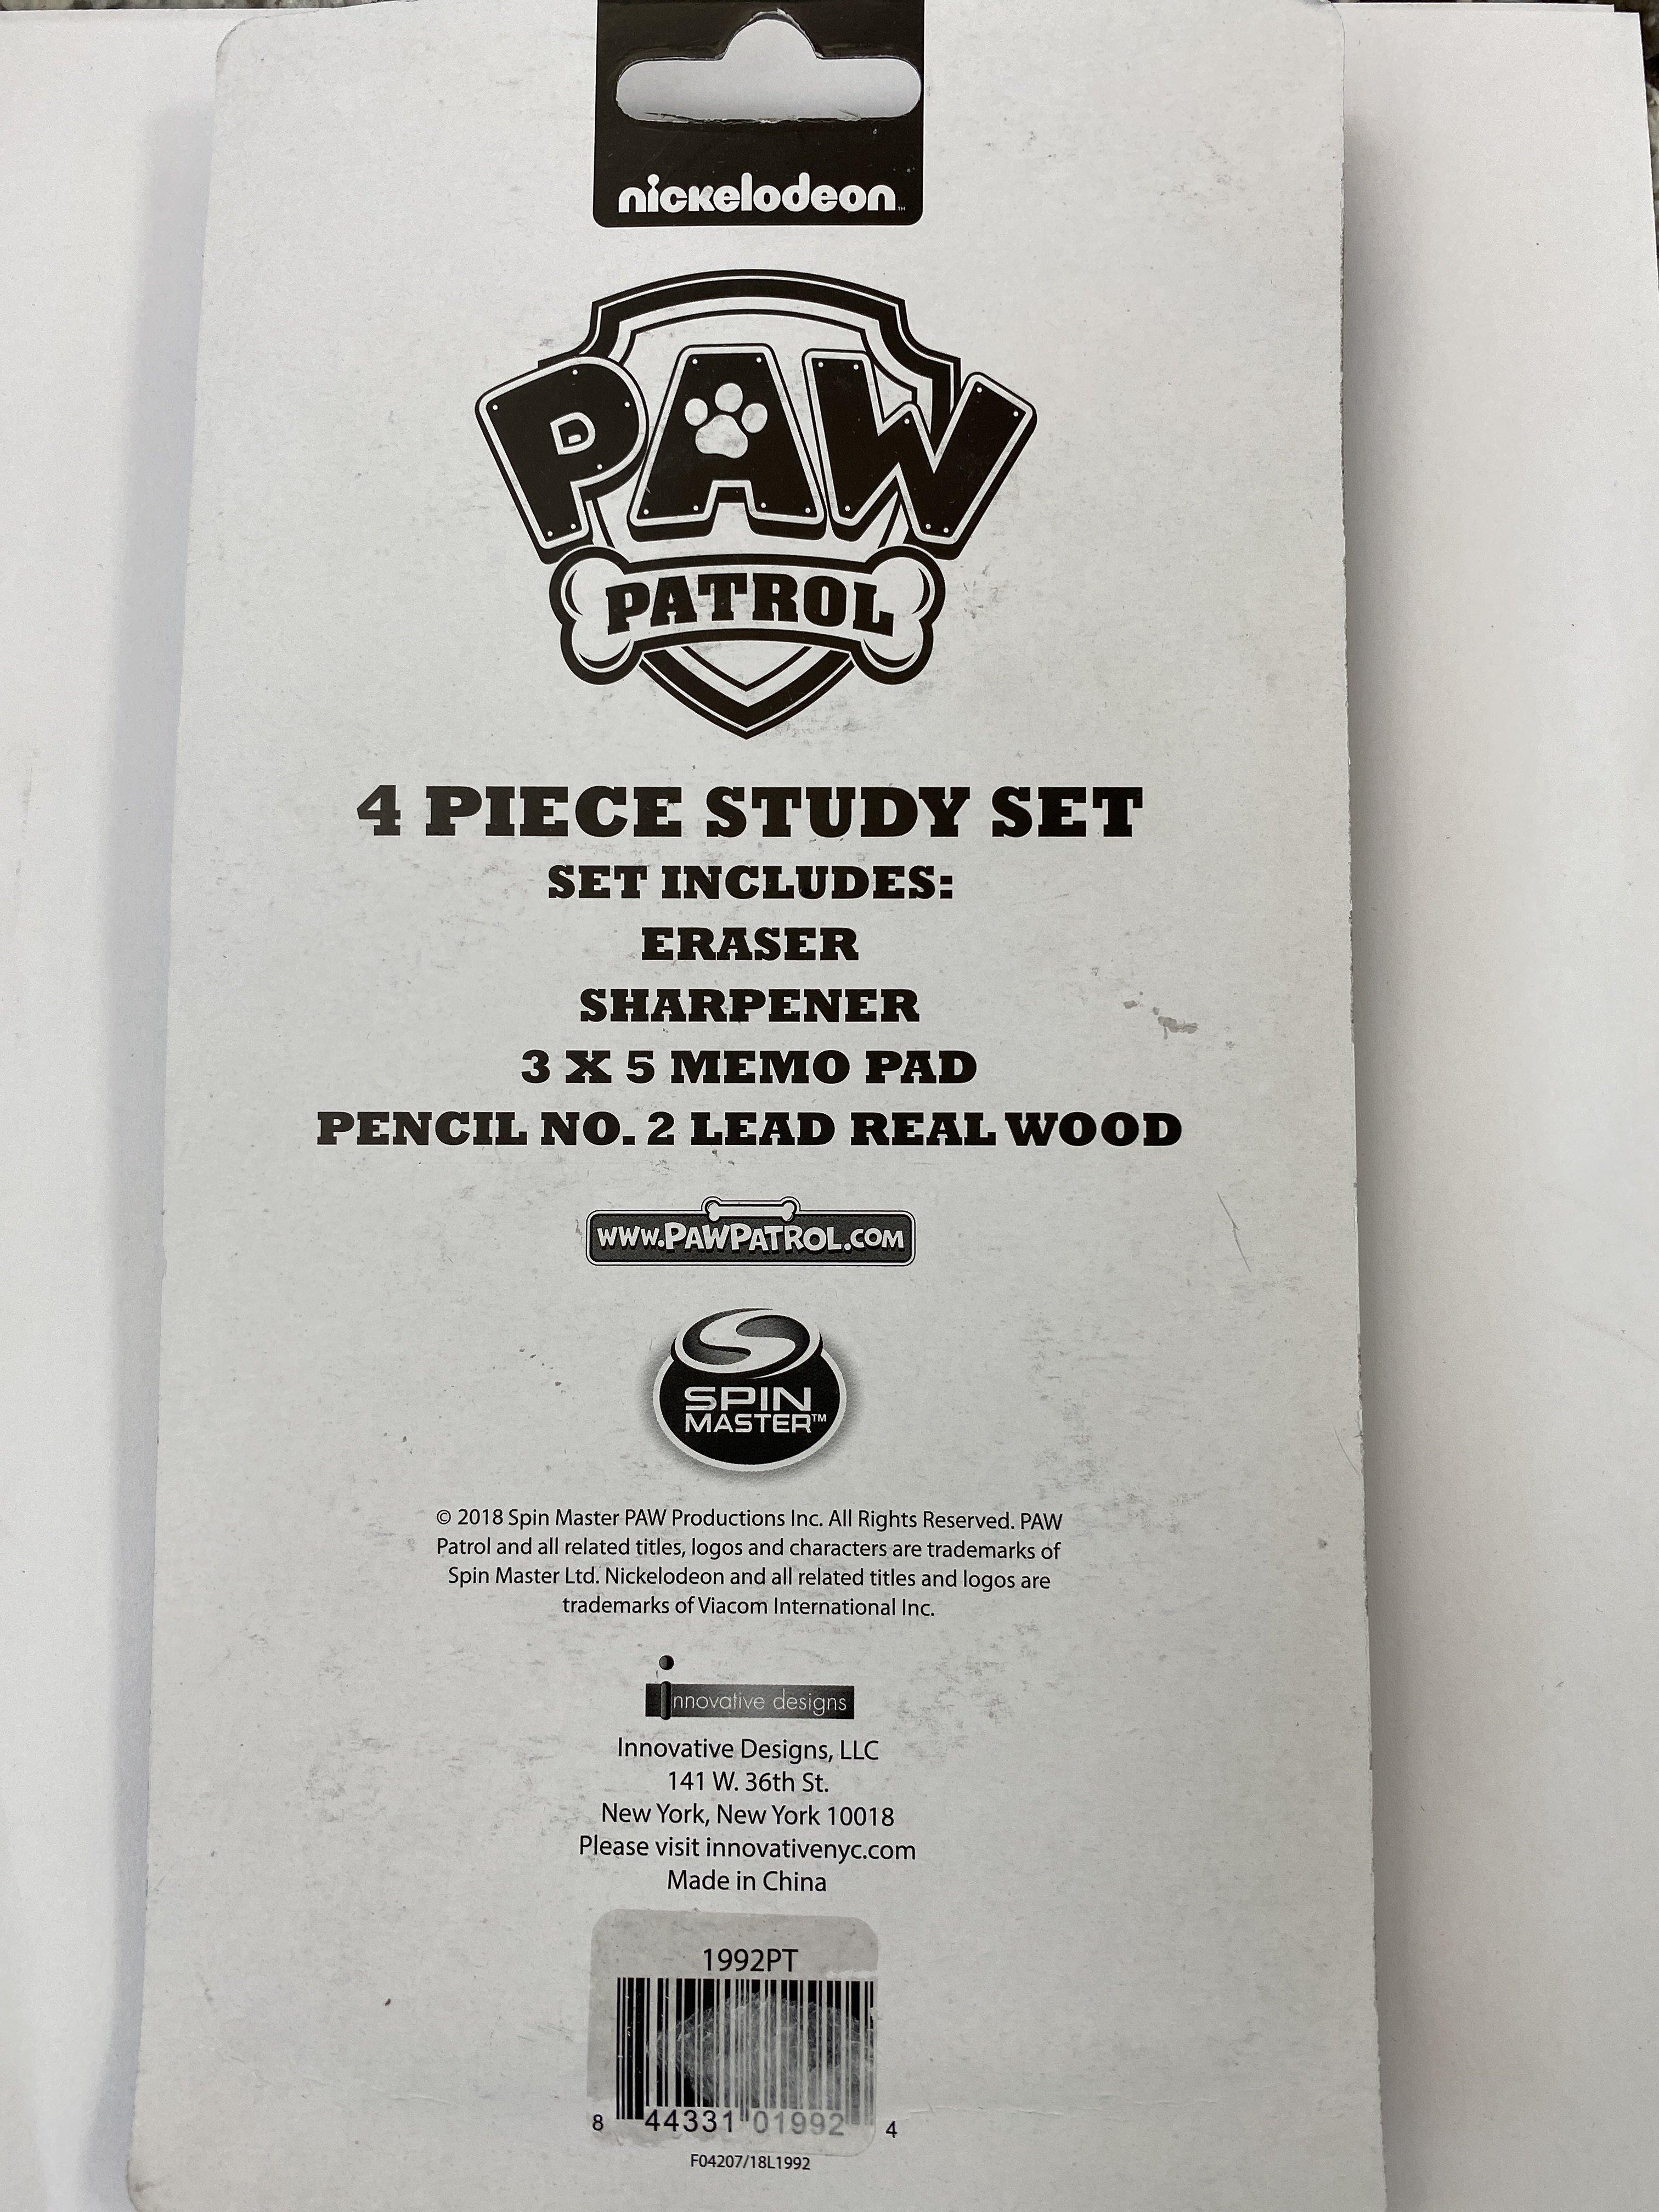 PAW PATROL 4PK STUDY KIT ON CARD